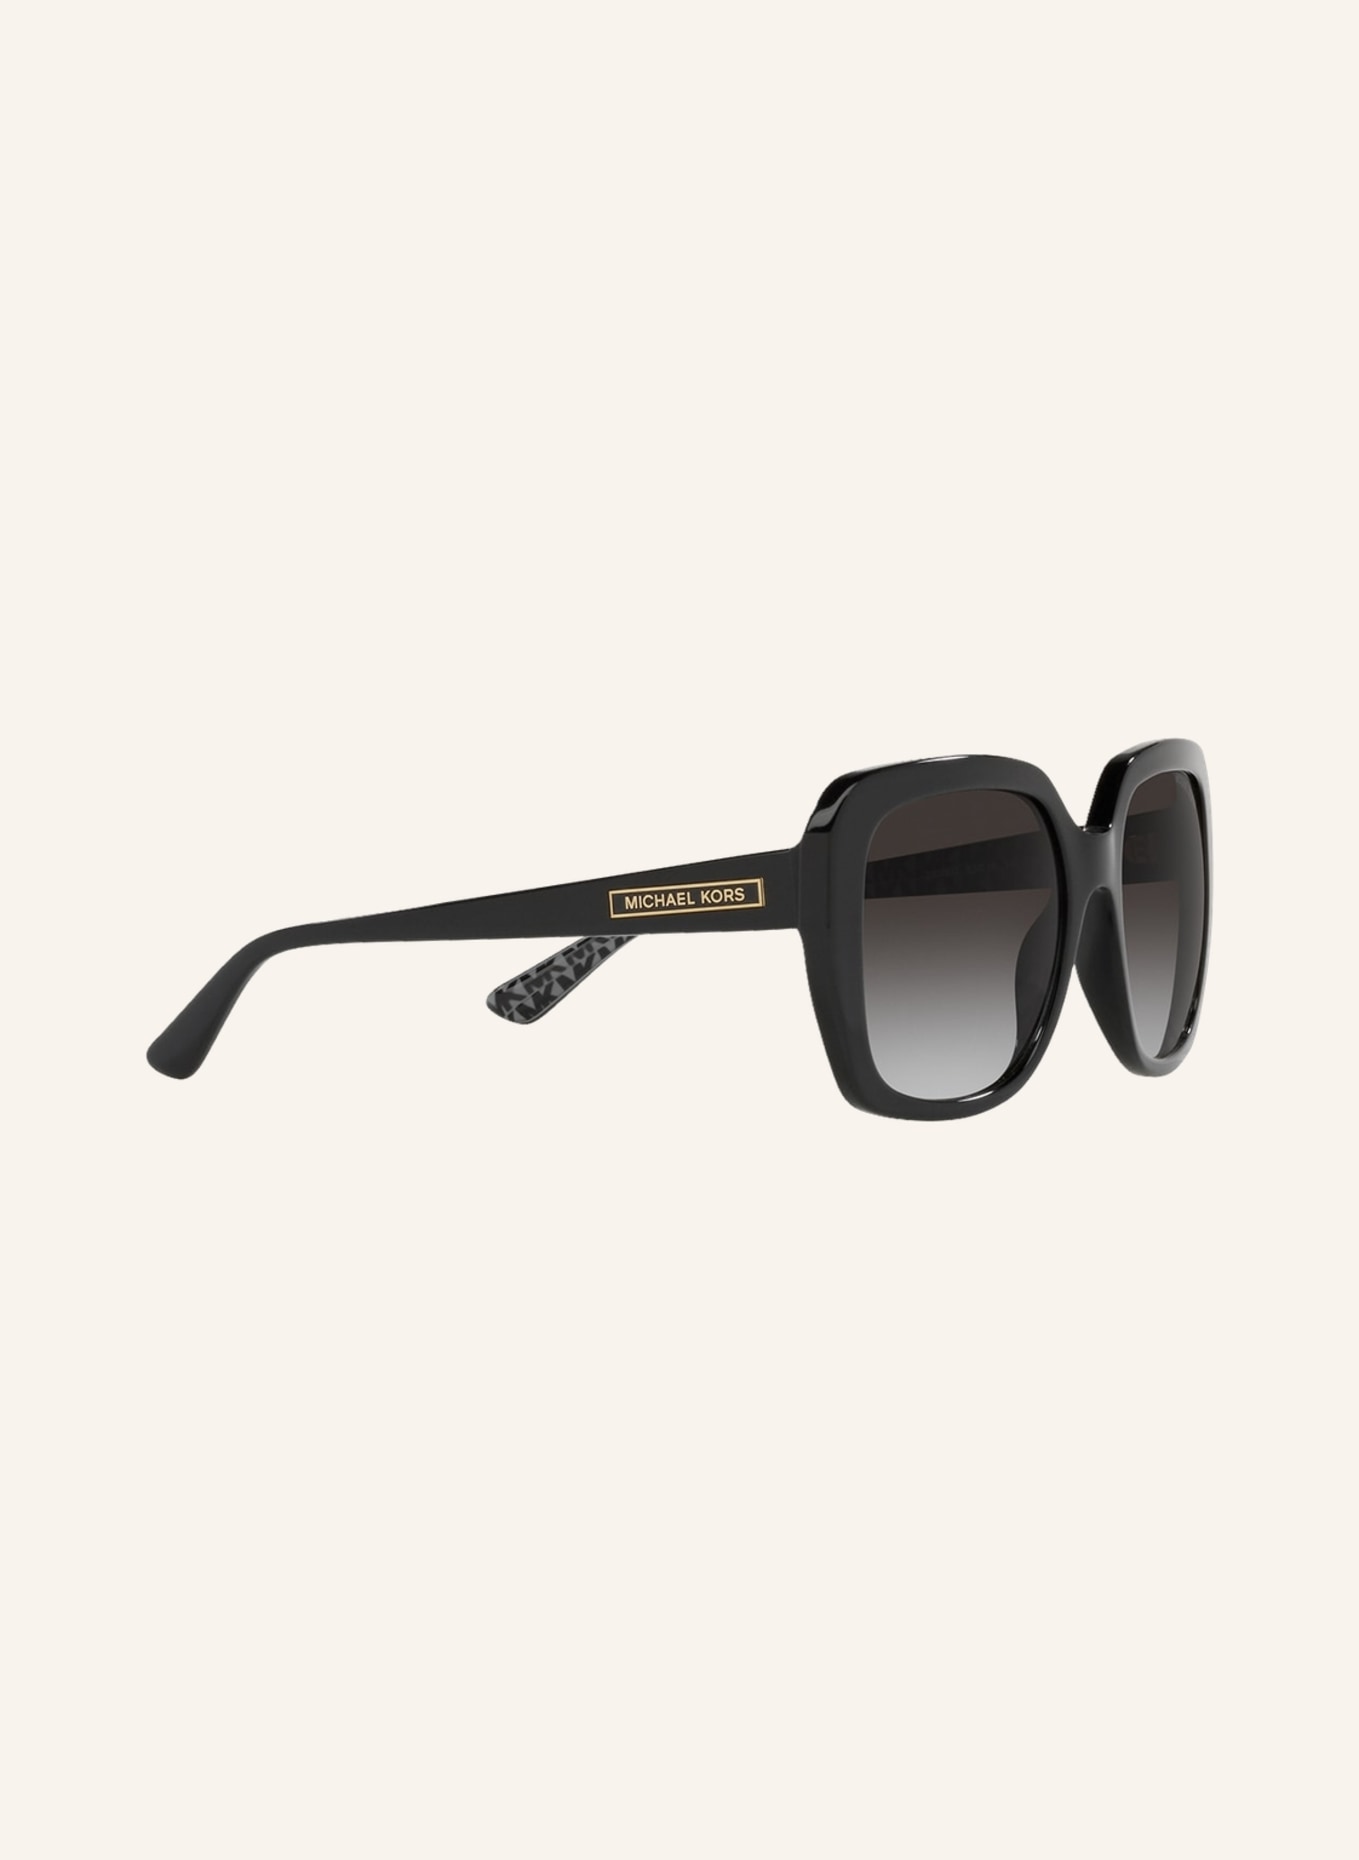 MICHAEL KORS Sunglasses MK-2140 MANHASSET, Color: 30058G - BLACK/GRAY GRADIENT (Image 3)